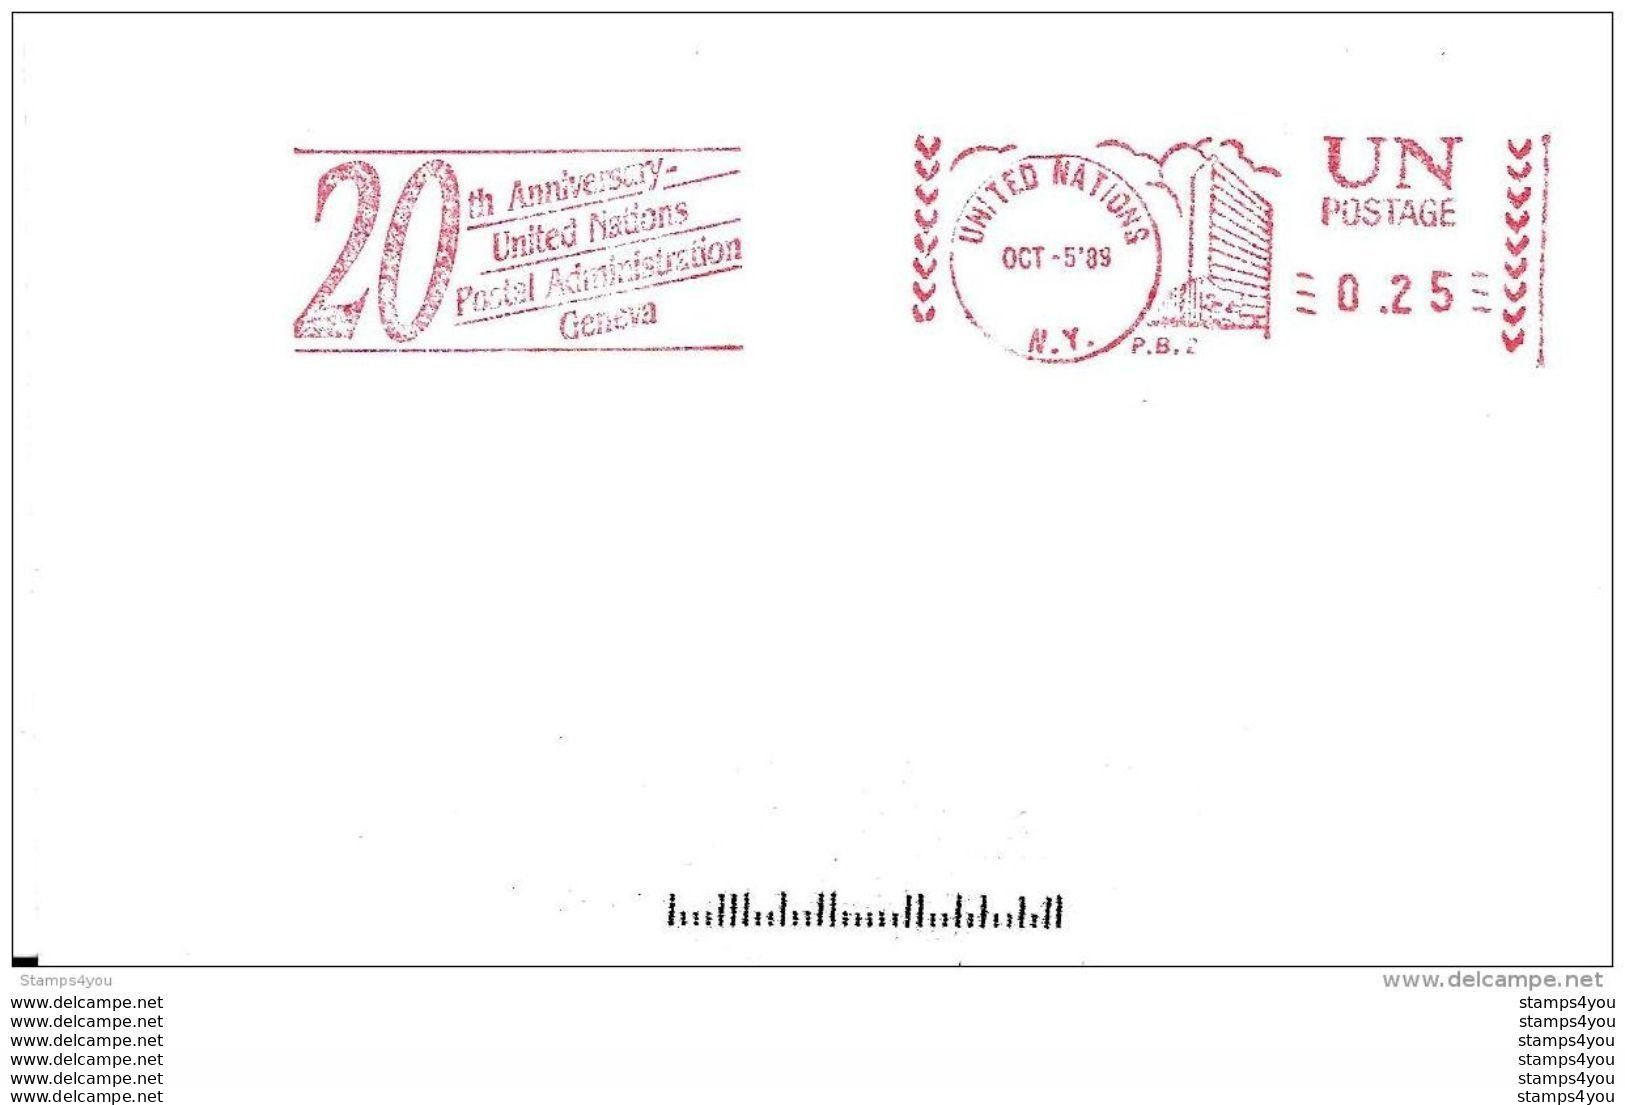 56 - 99 - Enveloppe Nataions Unies New York - Oblit Mécanique 20th Anniversary 1989 - Lettres & Documents